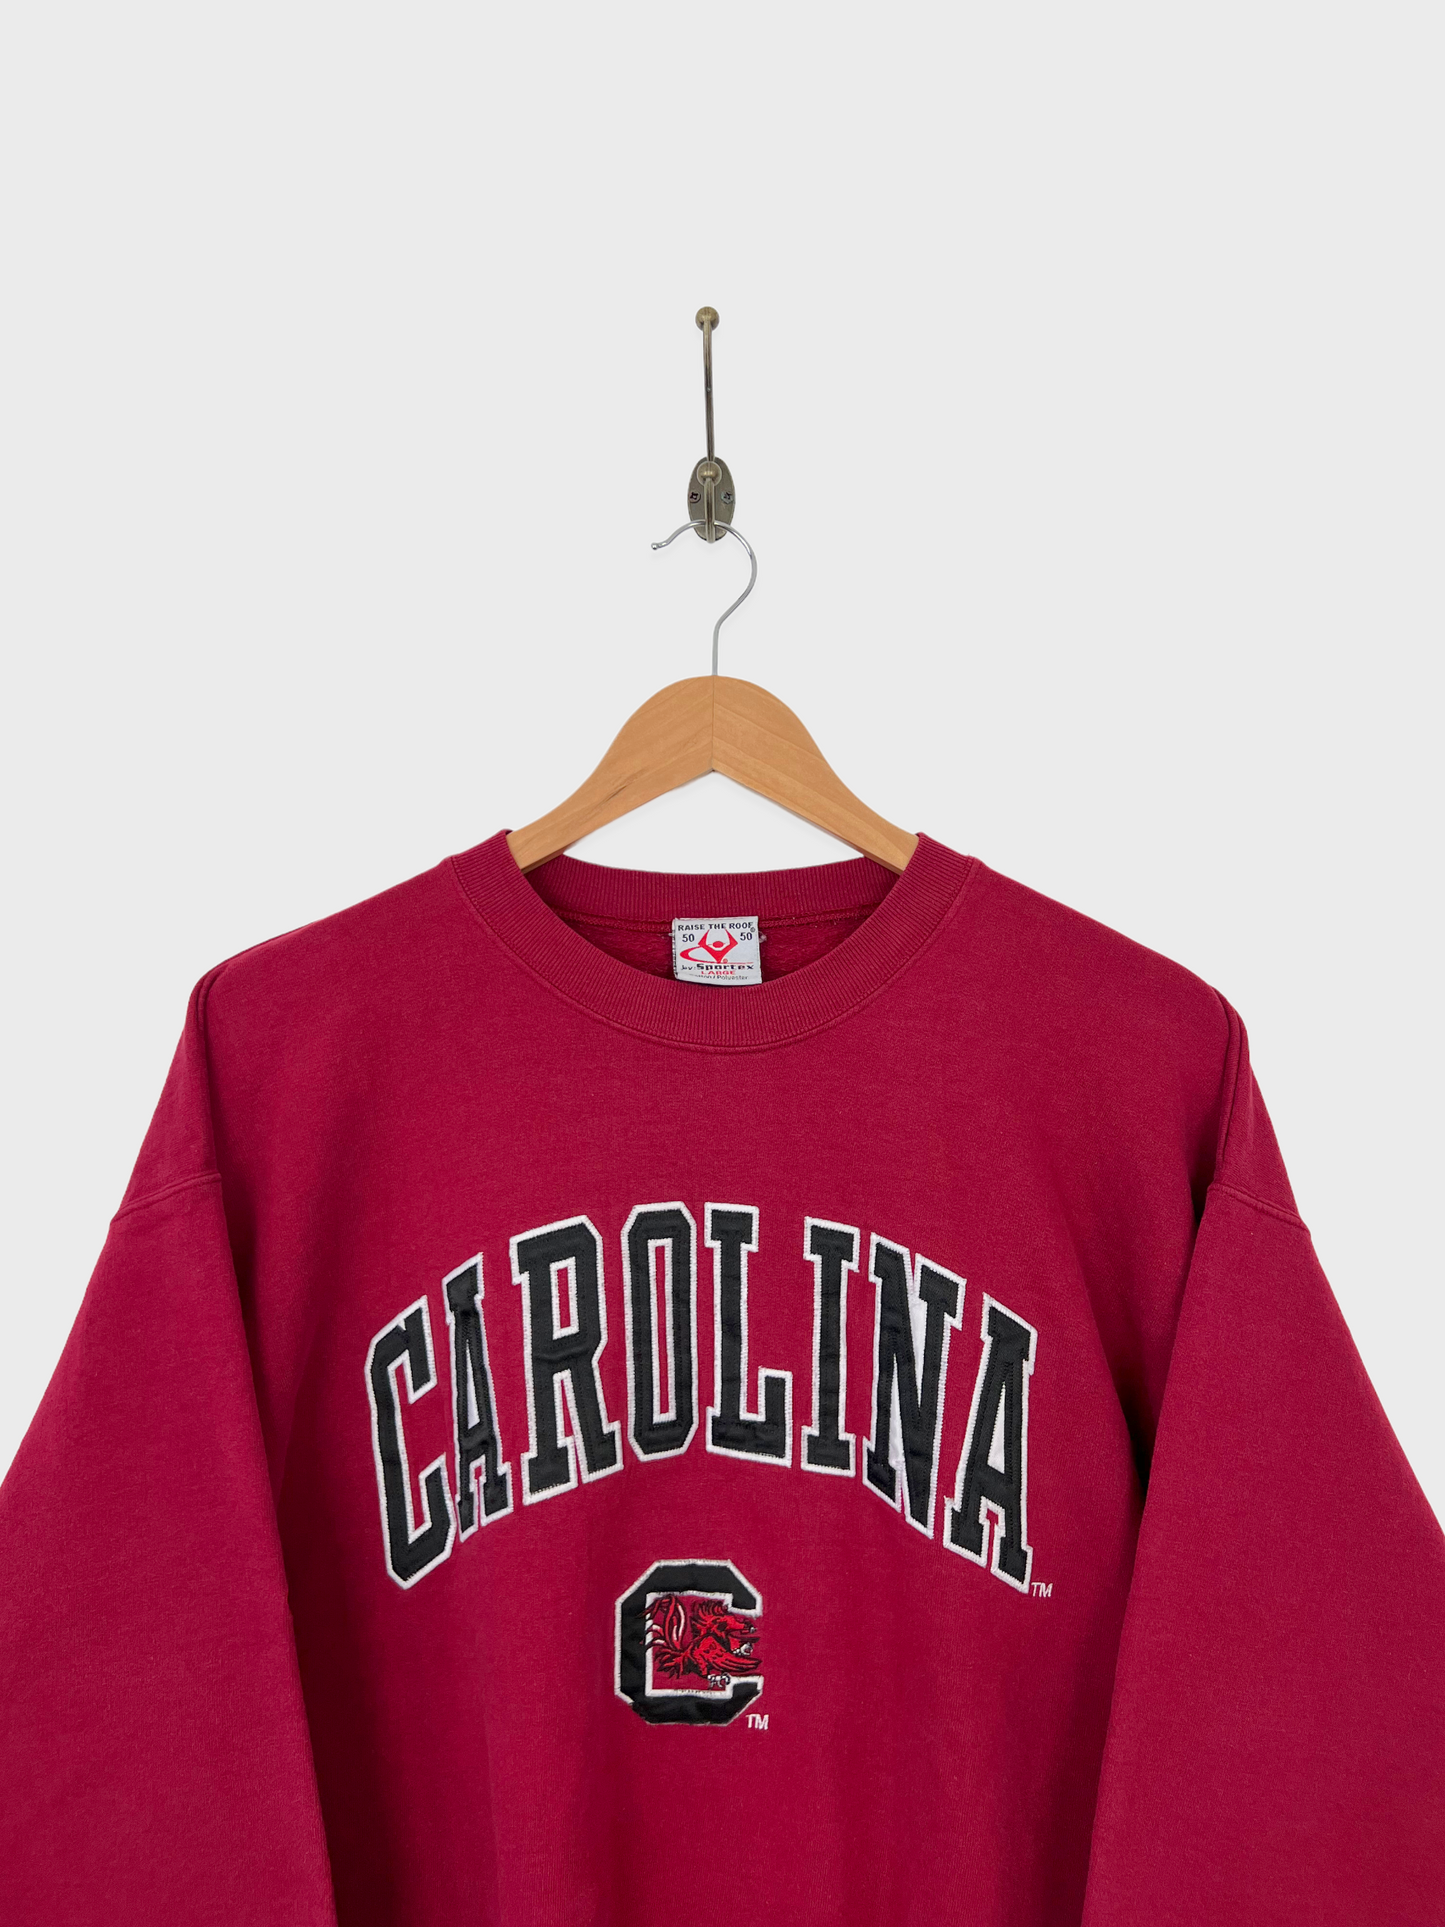 90's South Carolina Uni Embroidered Vintage Sweatshirt Size 10